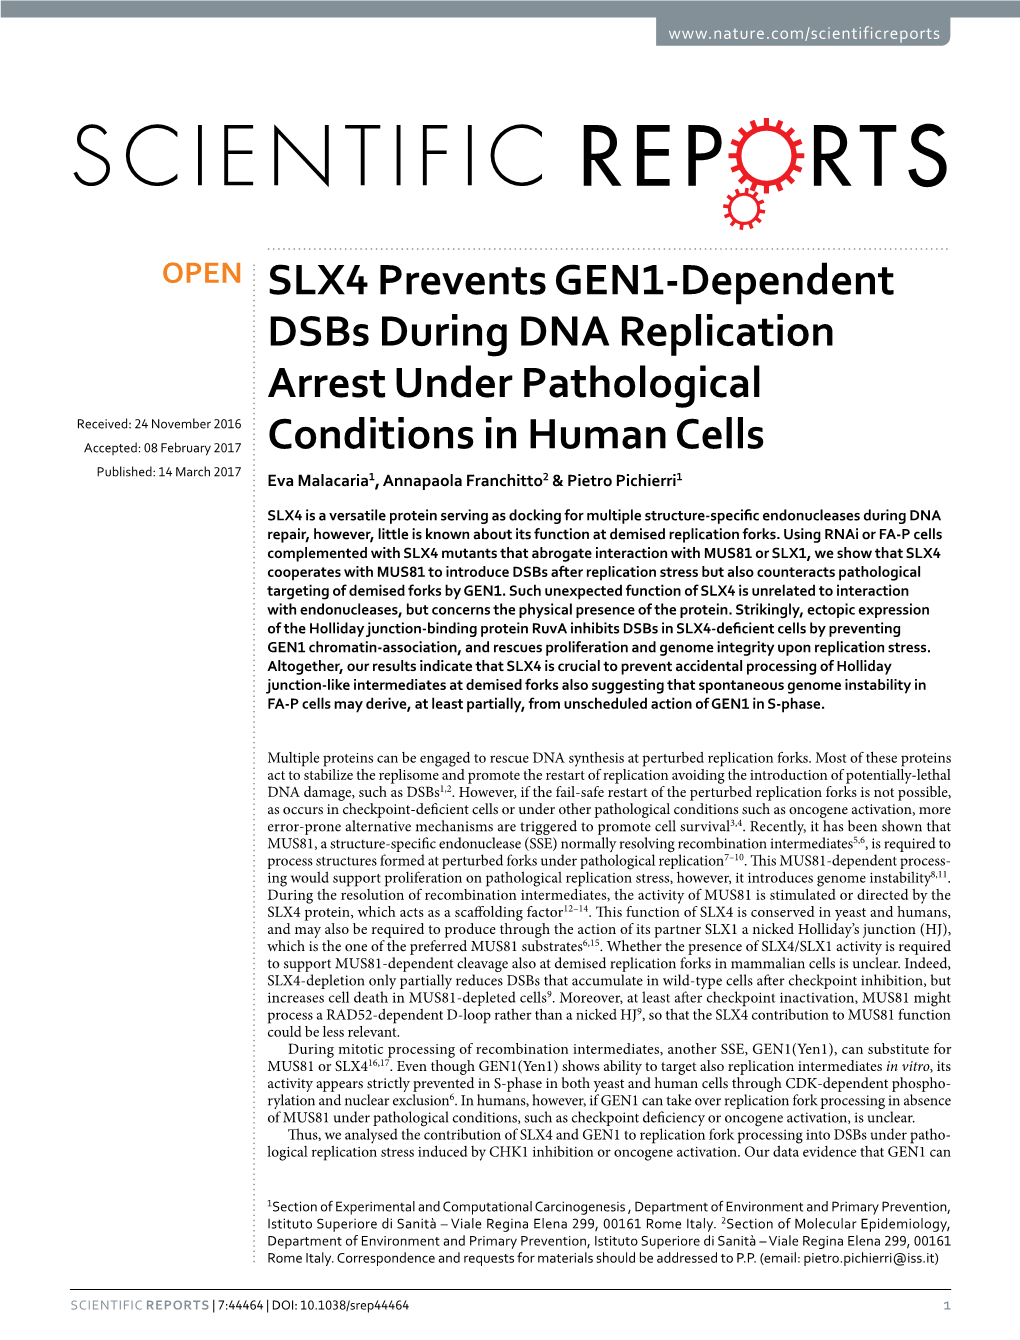 SLX4 Prevents GEN1-Dependent Dsbs During DNA Replication